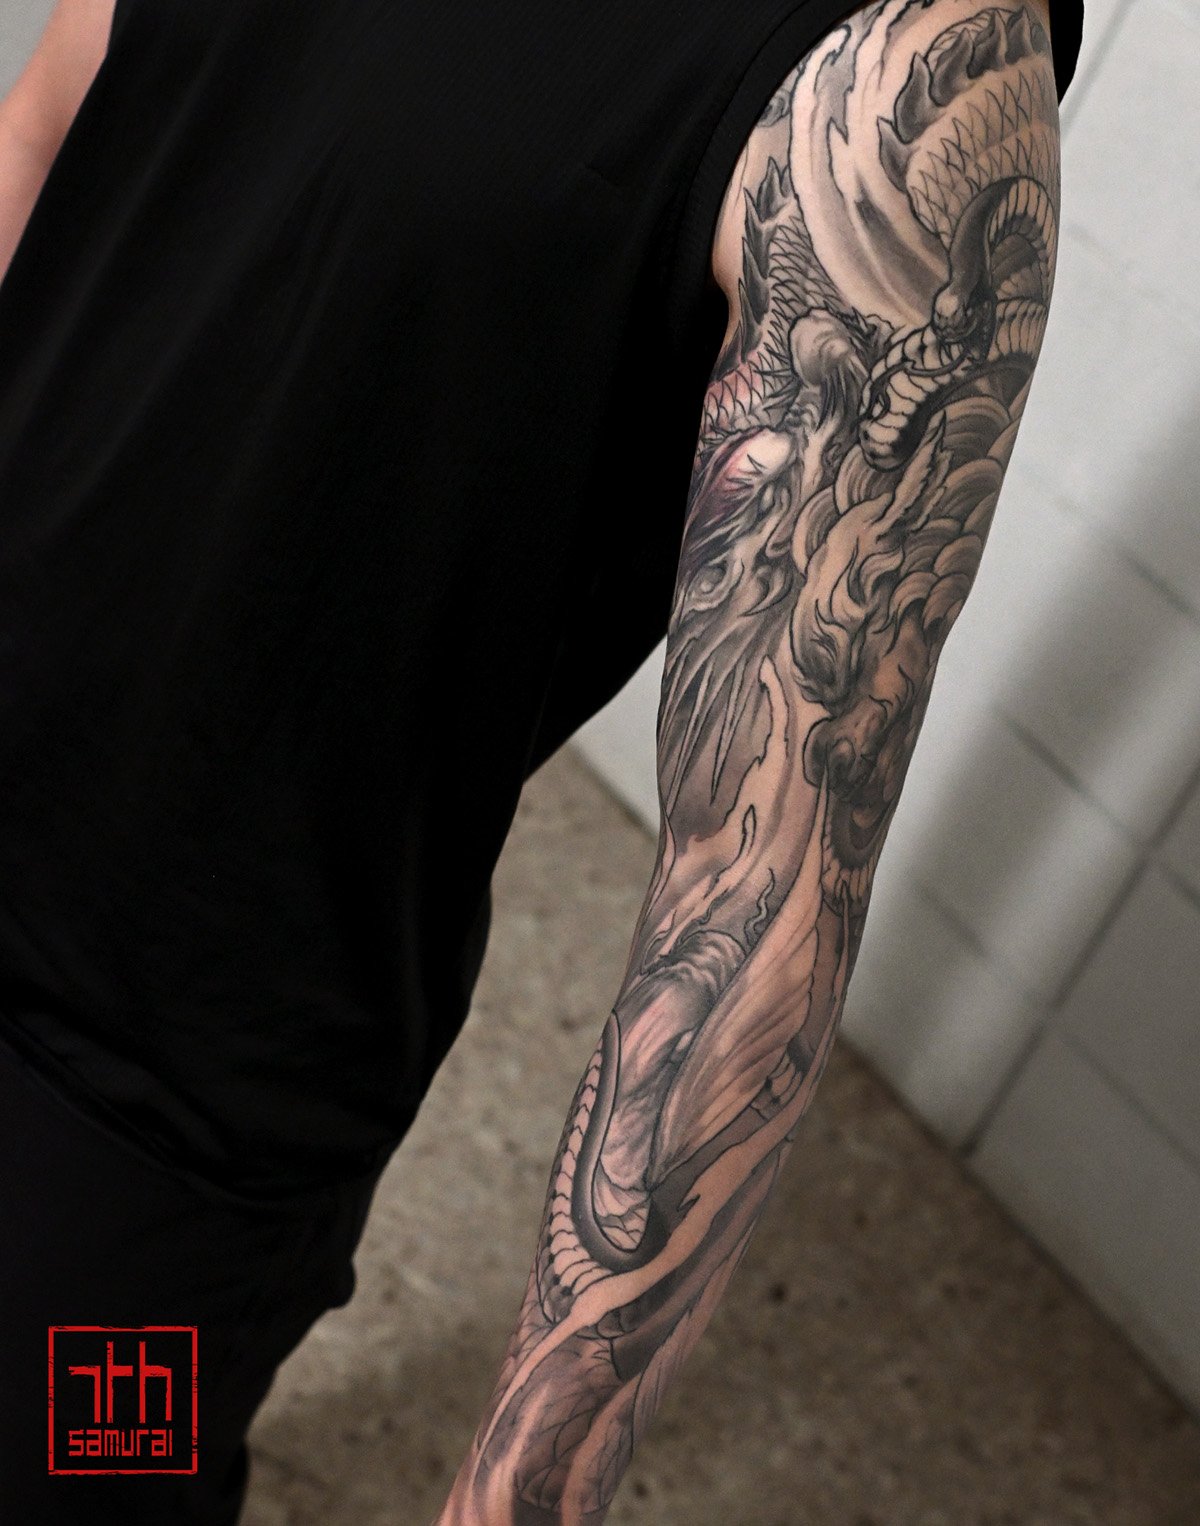 Asian zodiacs: year of Snake fudog koi dragon  Men's neo japanese asian astrology arm sleeve tattoo  asian artist: Kai 7th Samurai. YEG Edmonton, Alberta, Canada 2023 best 2024 